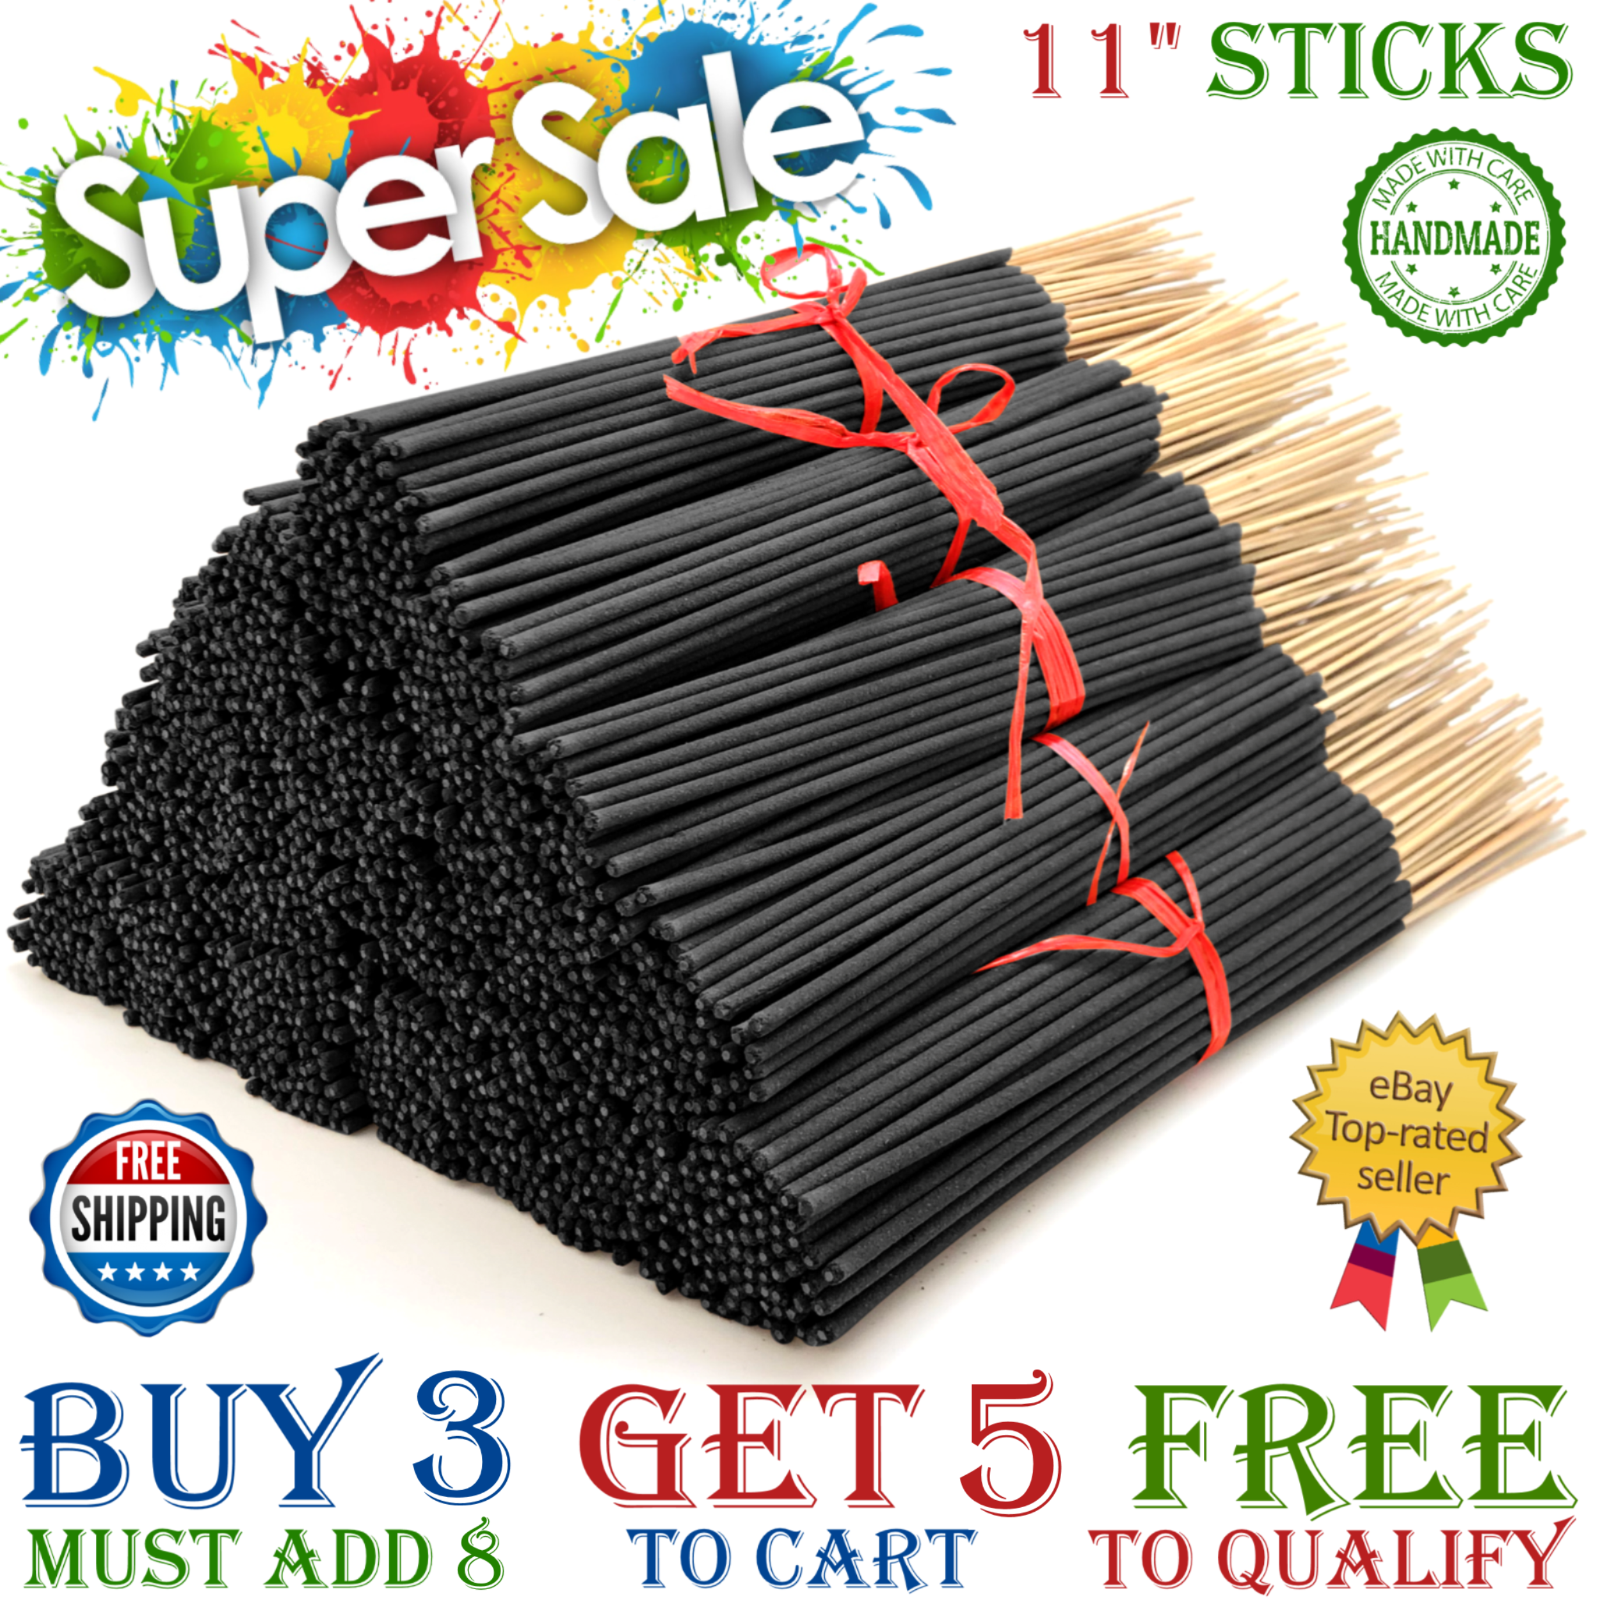 25 Incense Sticks 11